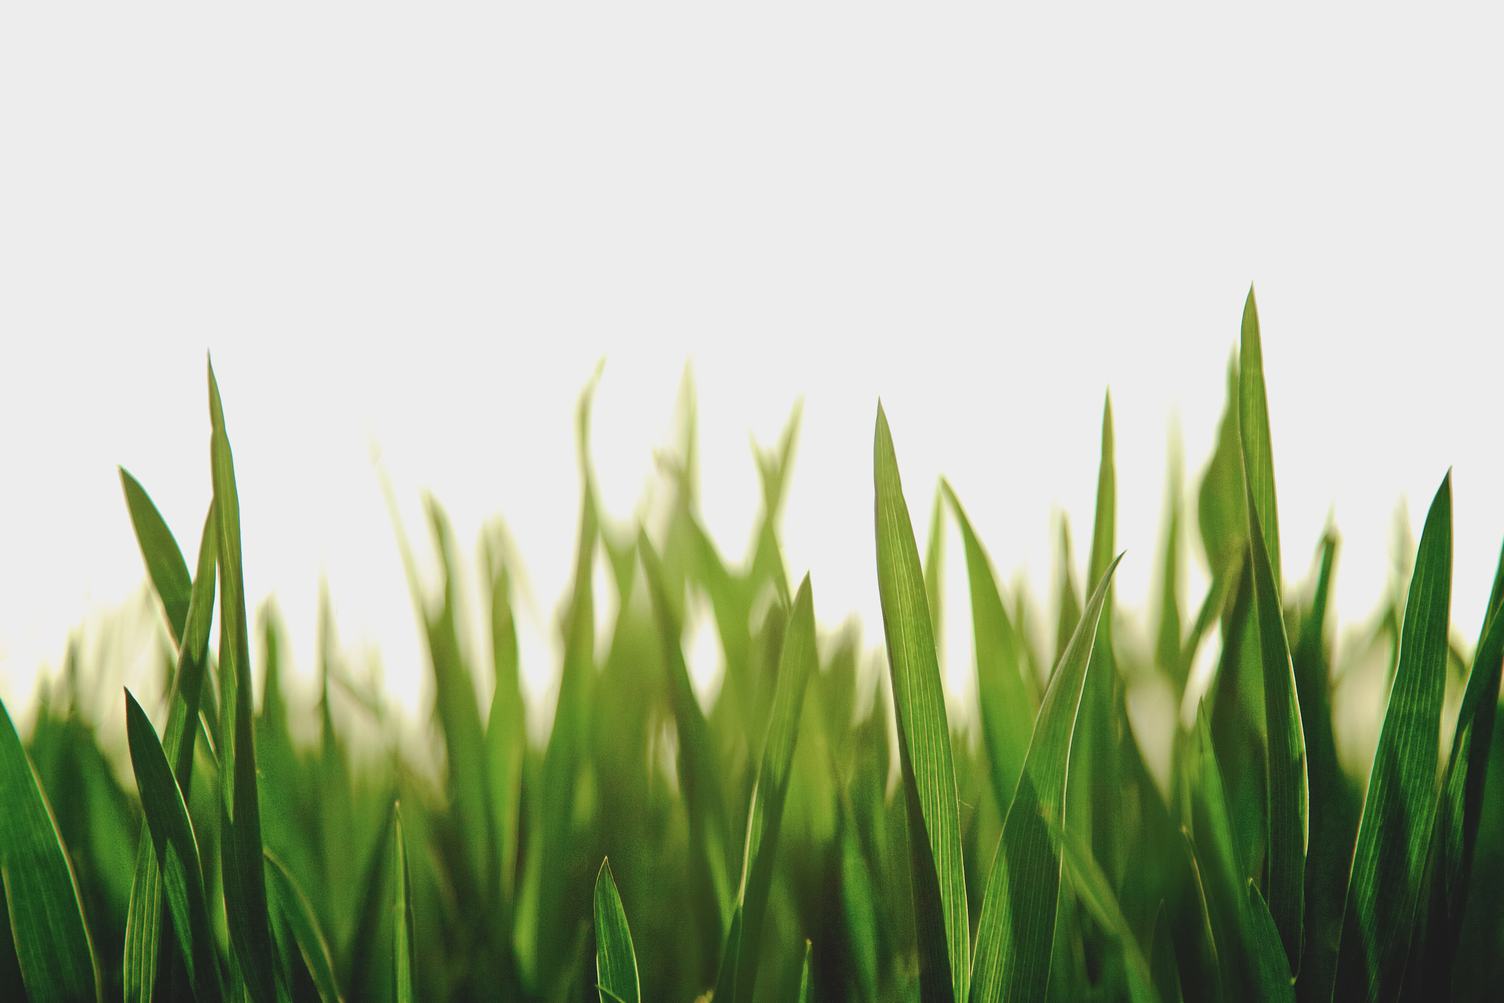 Fresh Spring Green Grass on White Background